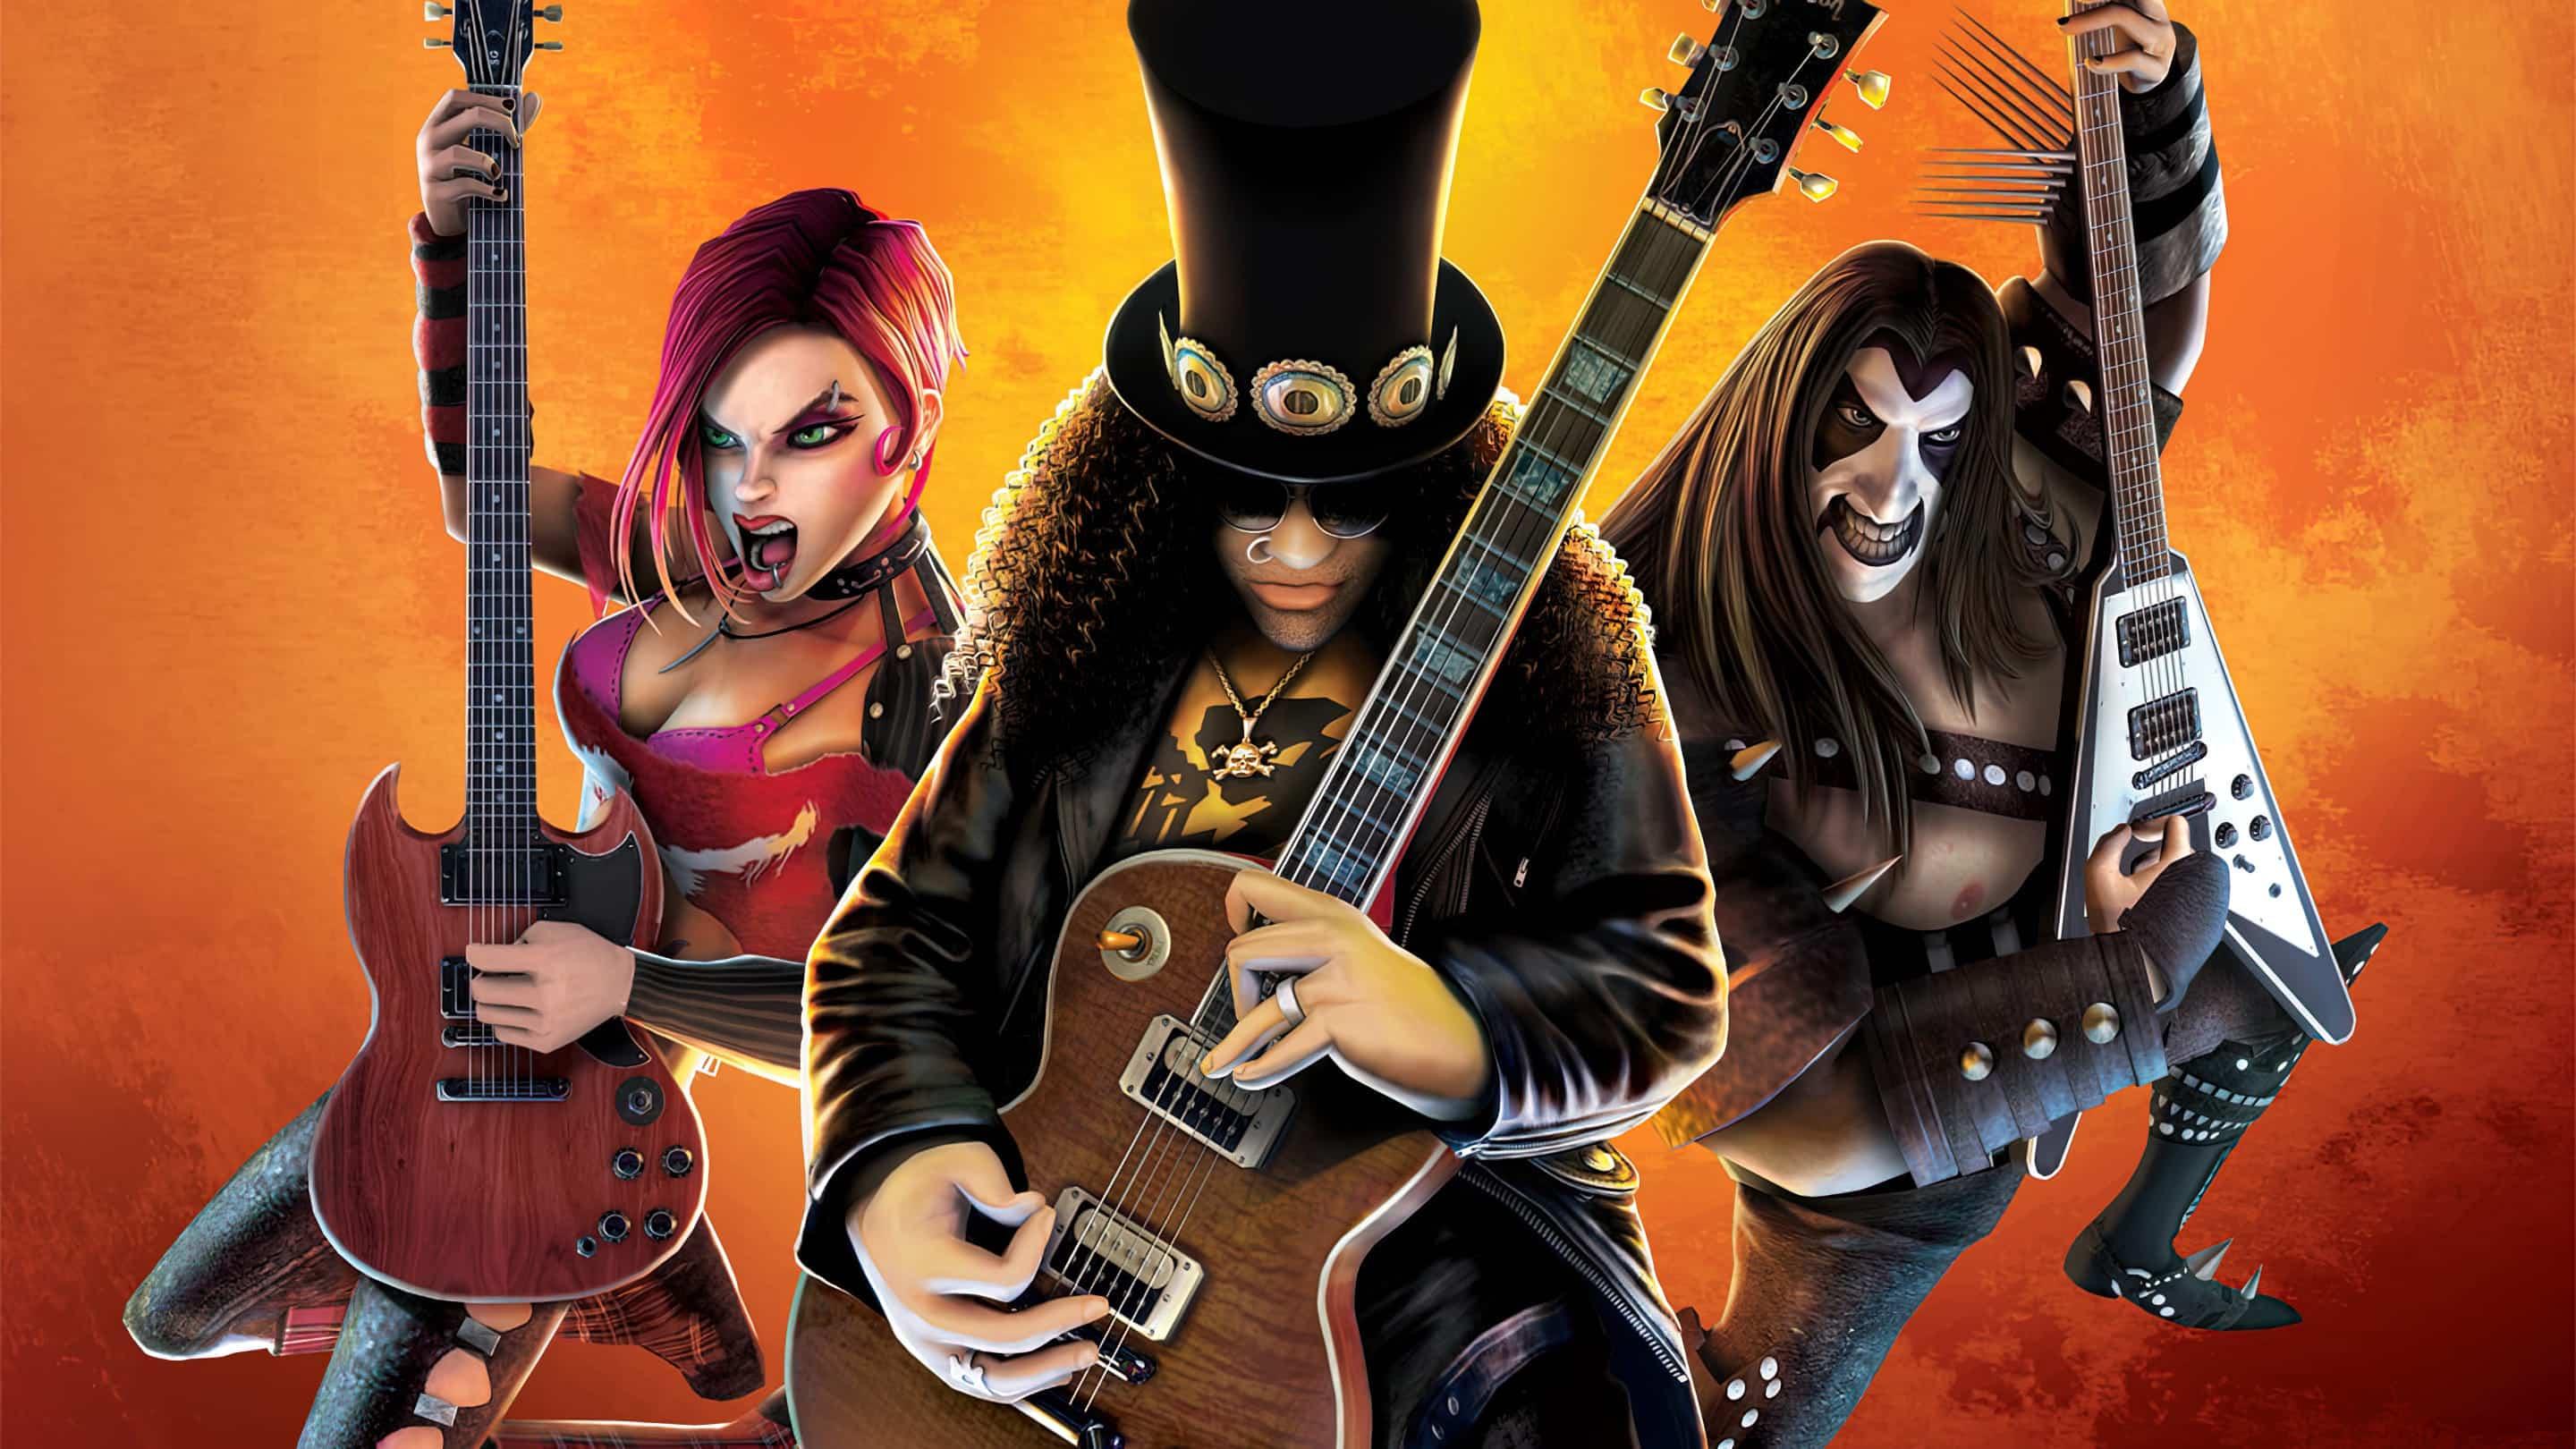 Guitar Hero III: Legends of Rock (2007). Altar of Gaming